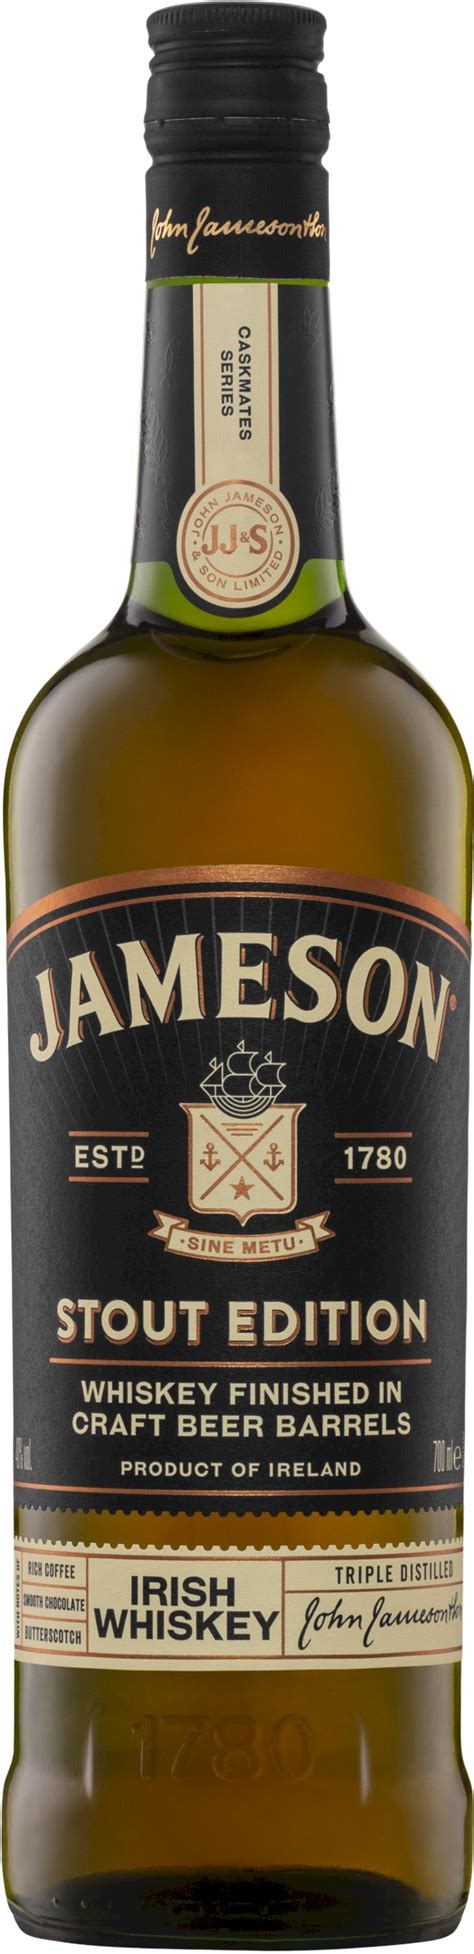 Jameson Caskmates Stout Edition Irish Whiskey 700ml First Choice